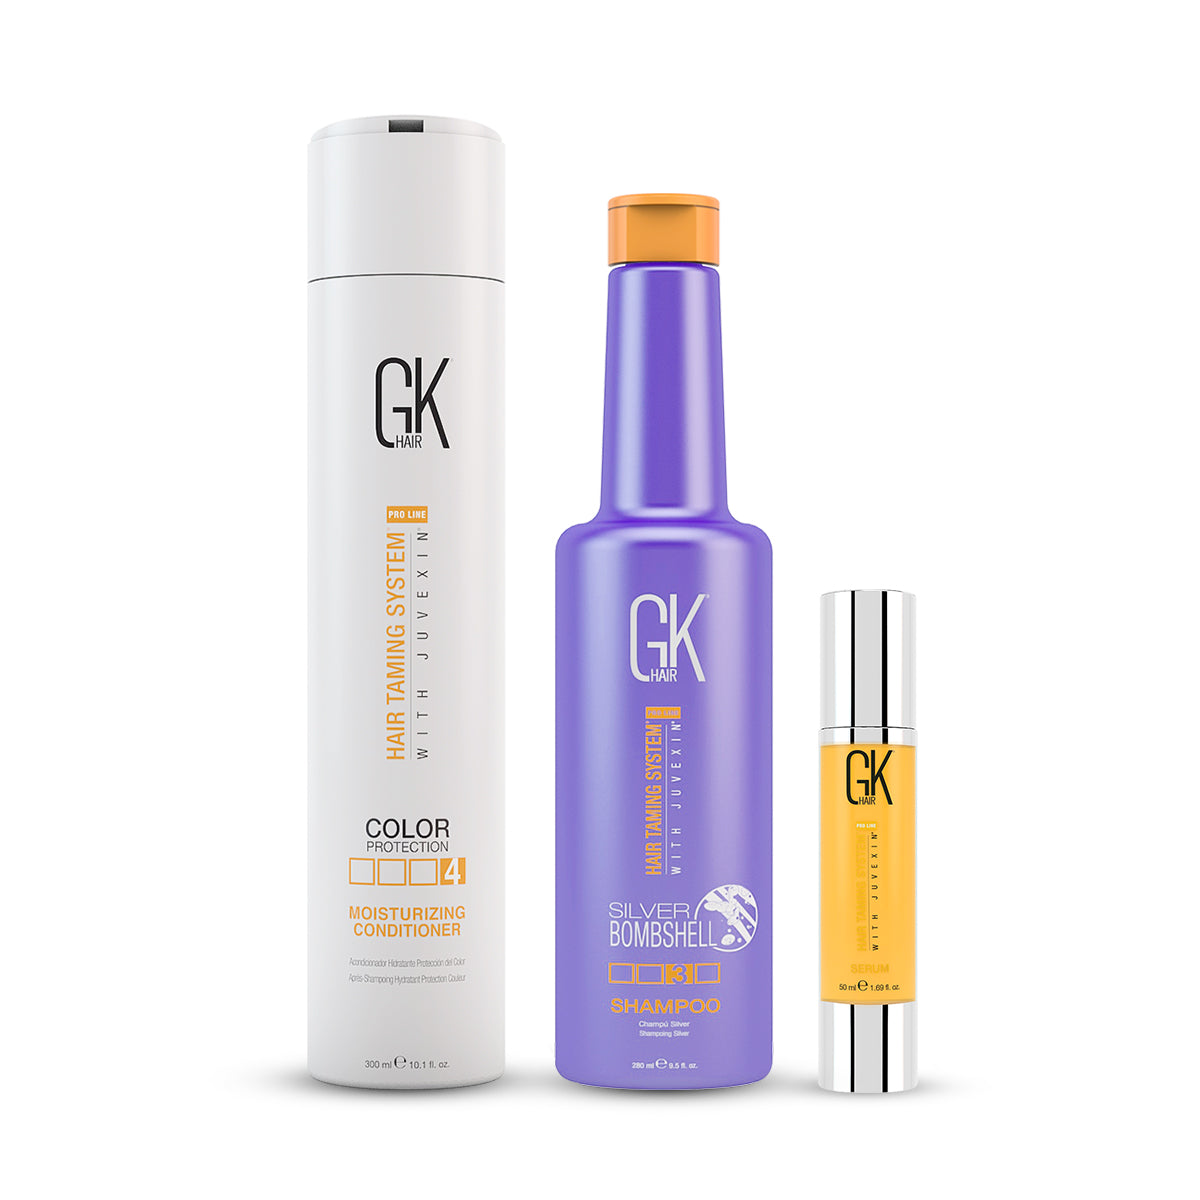 GK Hair Silver Bombshell Shampoo 280 Ml with Moisturizing Conditioner 300 Ml and Serum 50 Ml